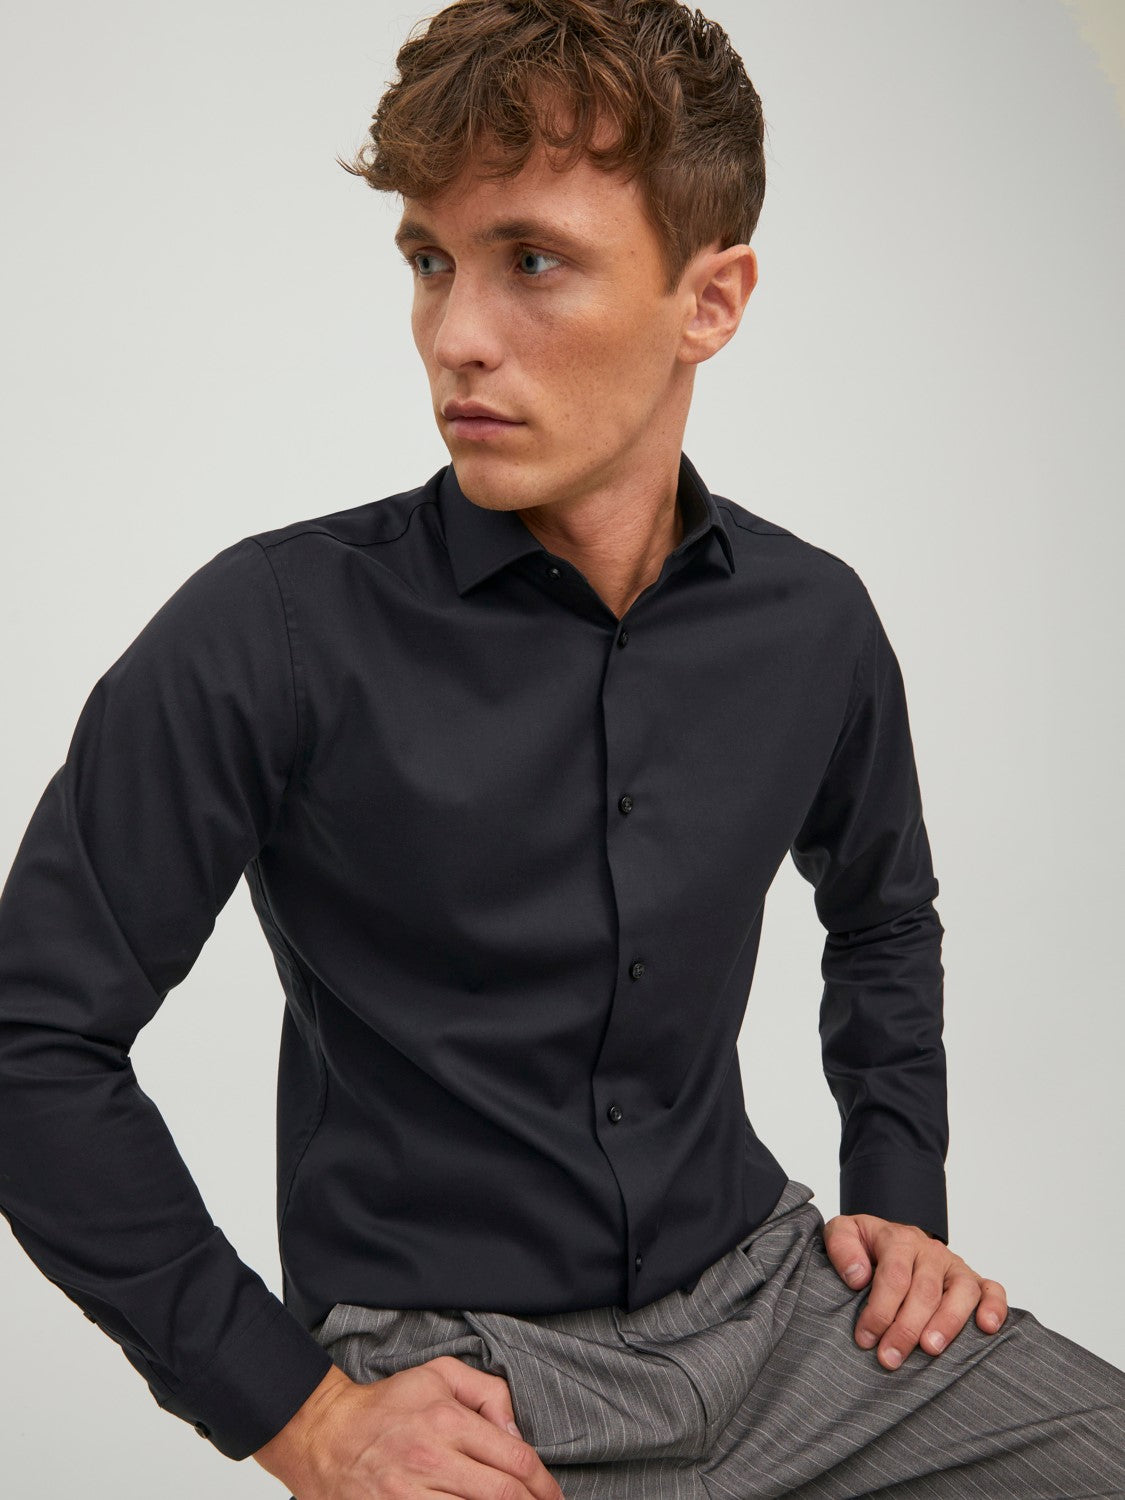 Men's Parker Black Shirt-Side View